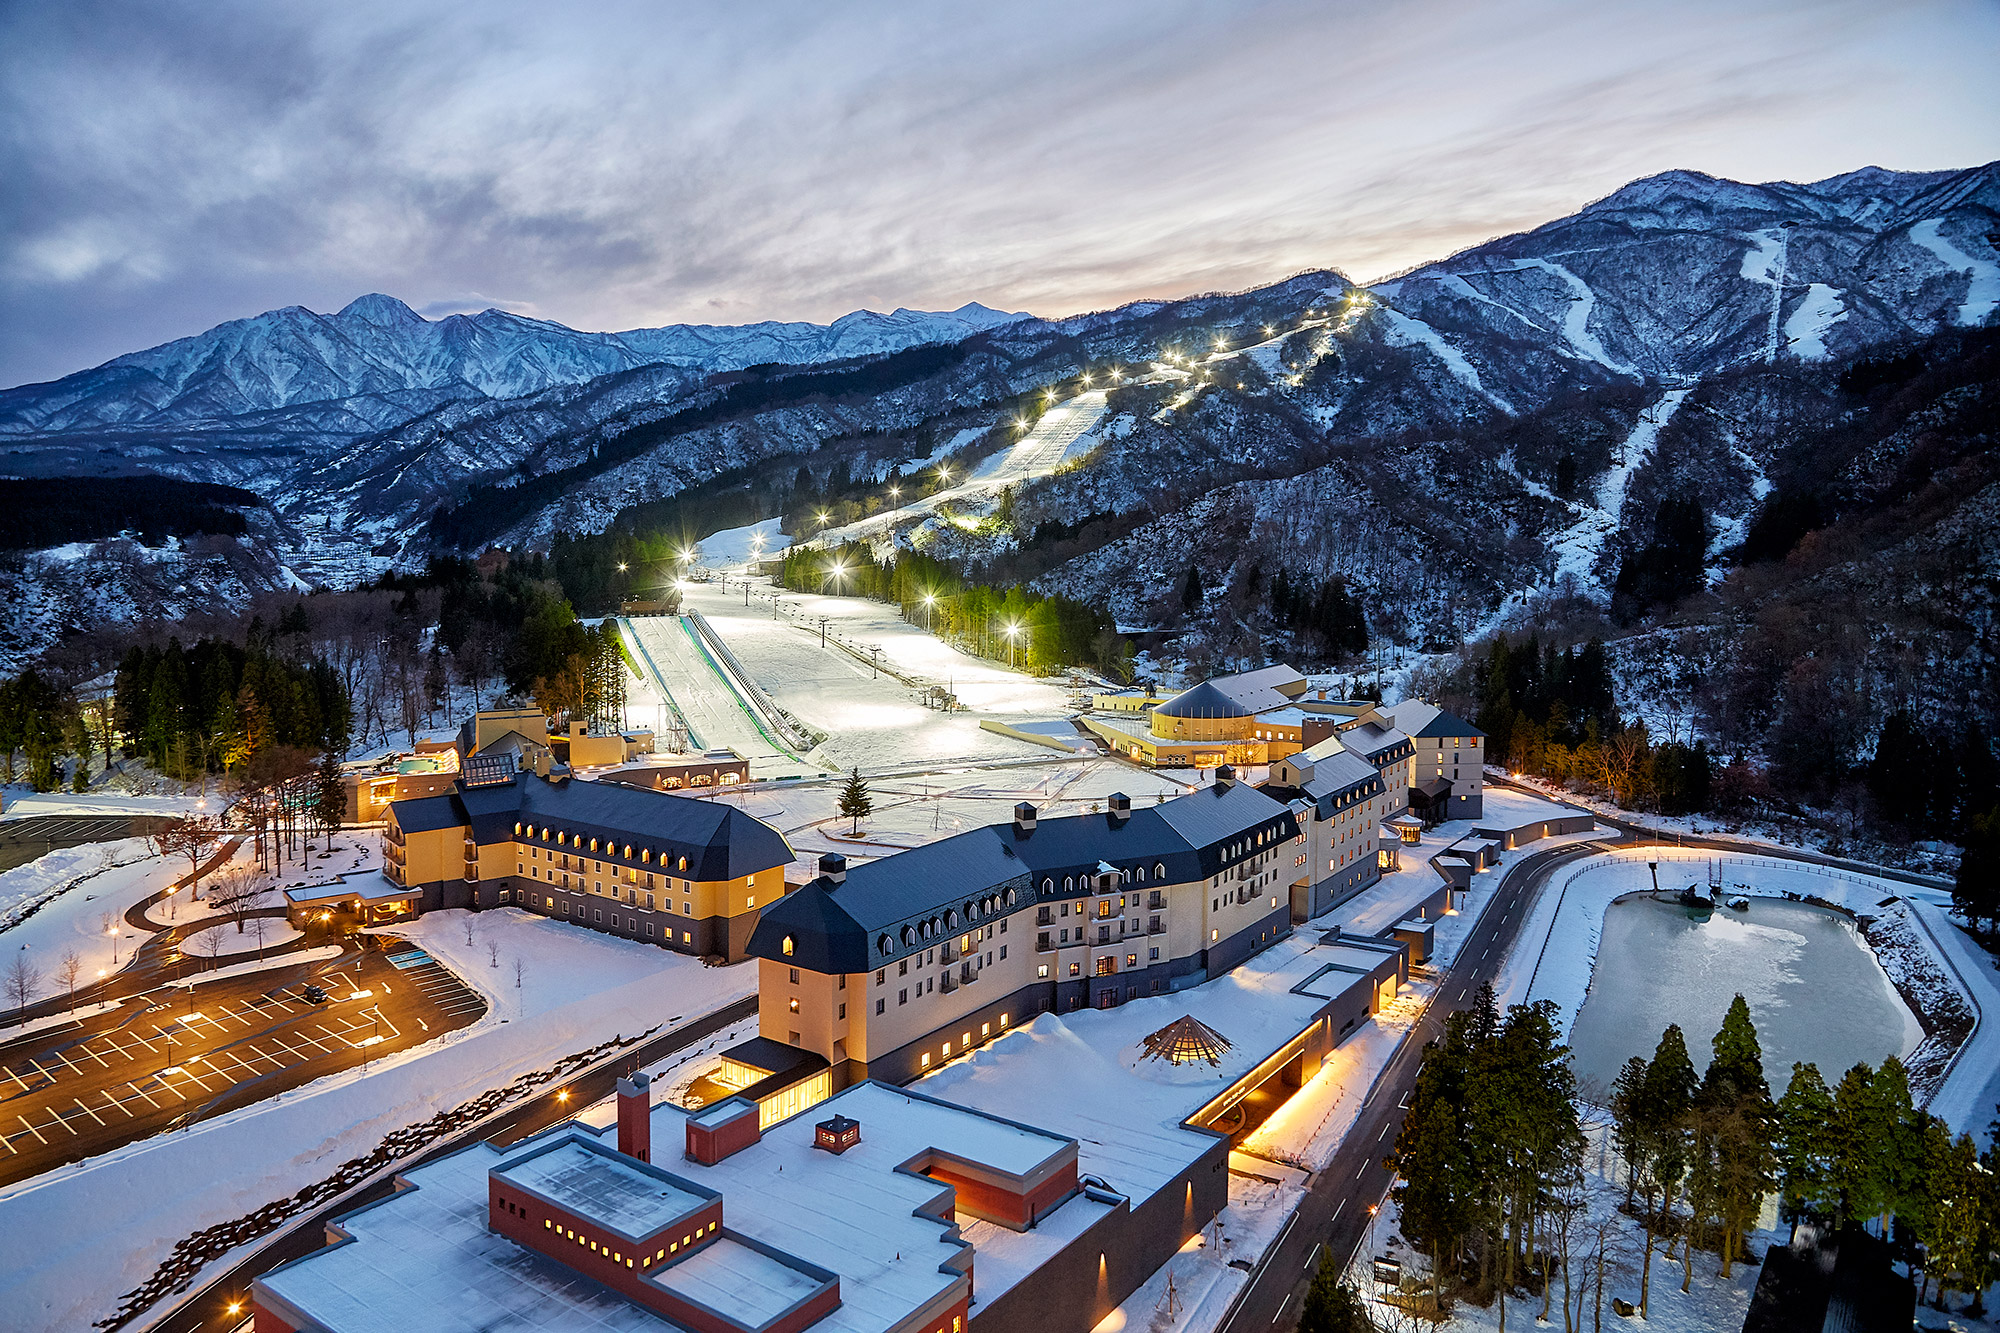 Lotte Arai Our Top Three Ski Destinations 